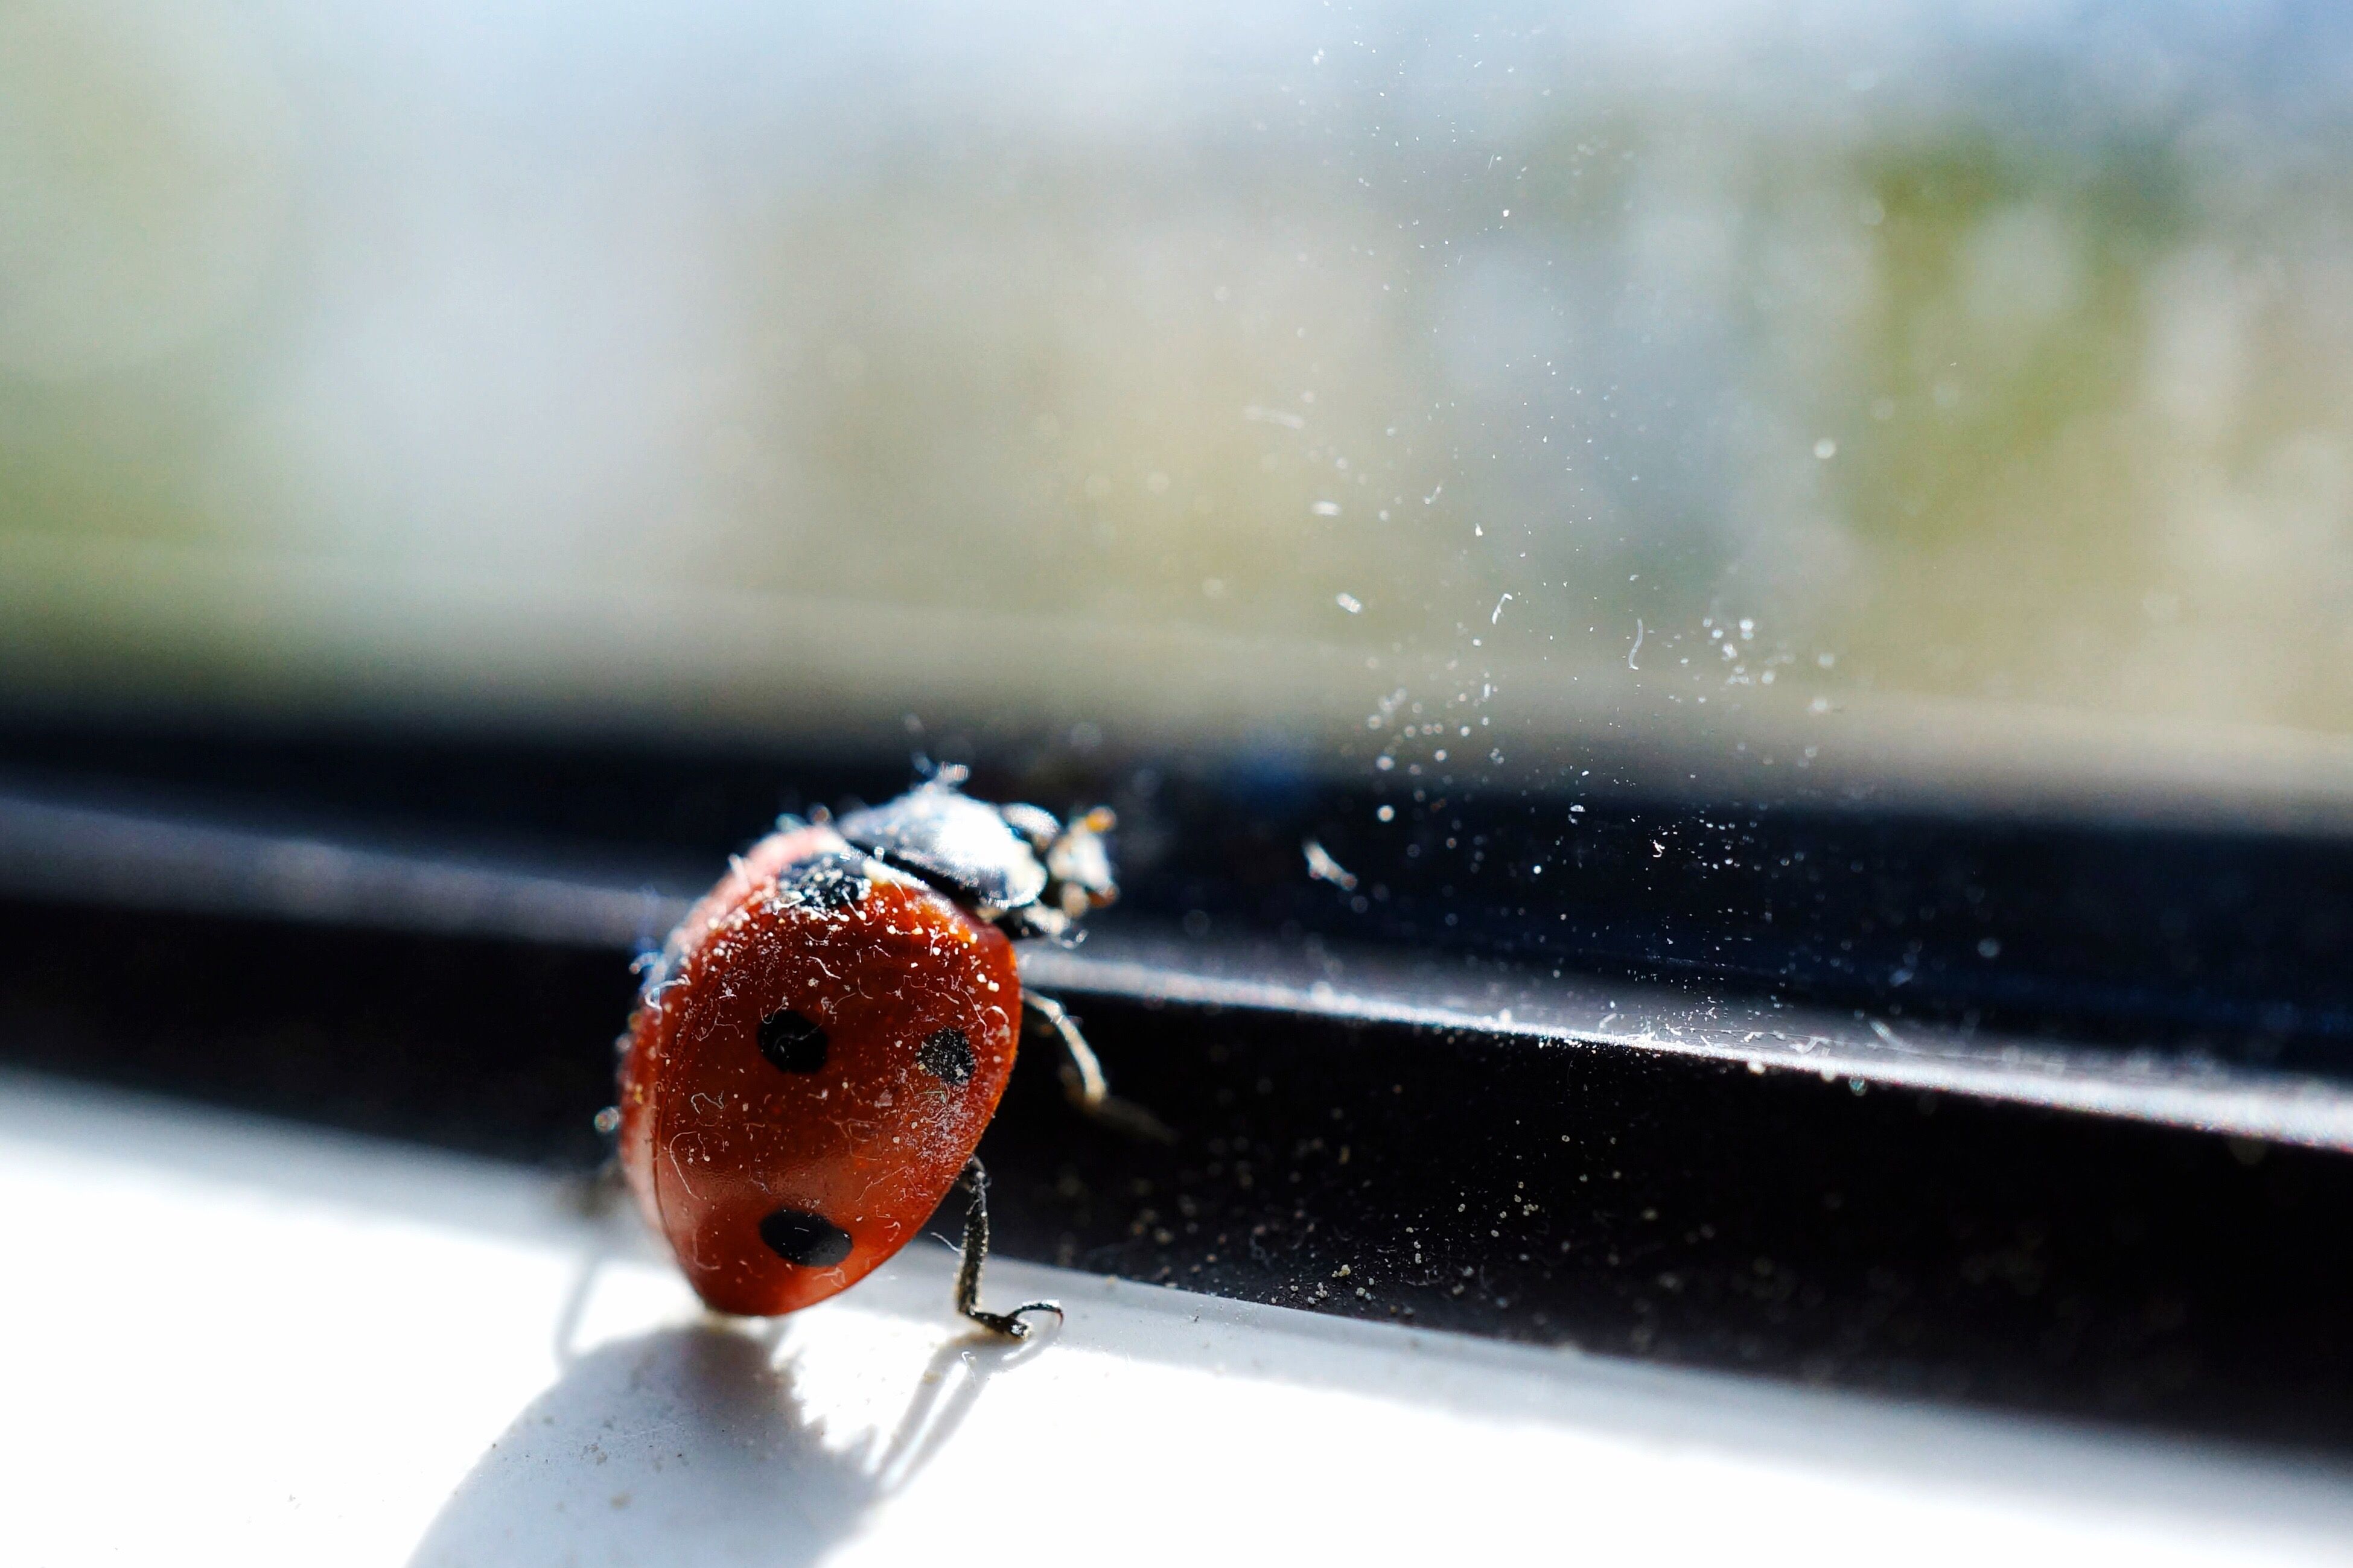 Inside Ladybug Land: Understanding the Spots